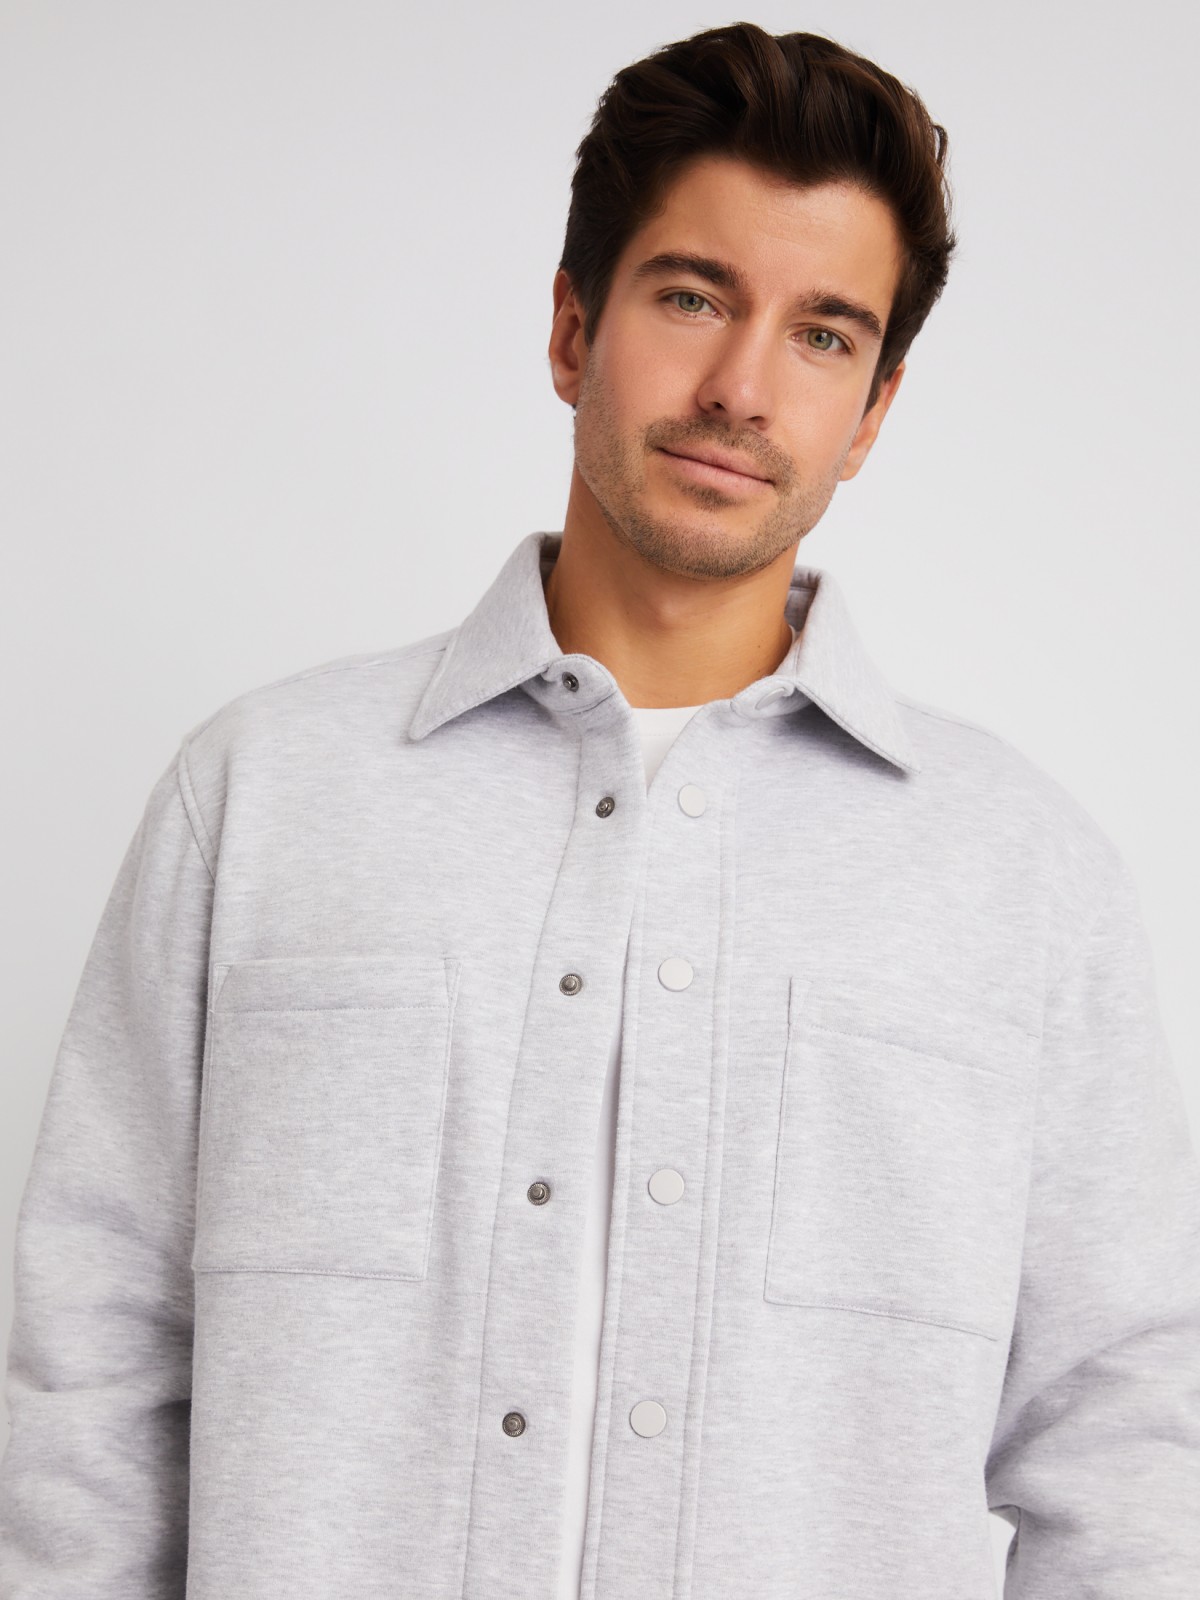 Утеплённая трикотажная куртка-рубашка с начёсом zolla 01411432F023, цвет серый, размер S - фото 3